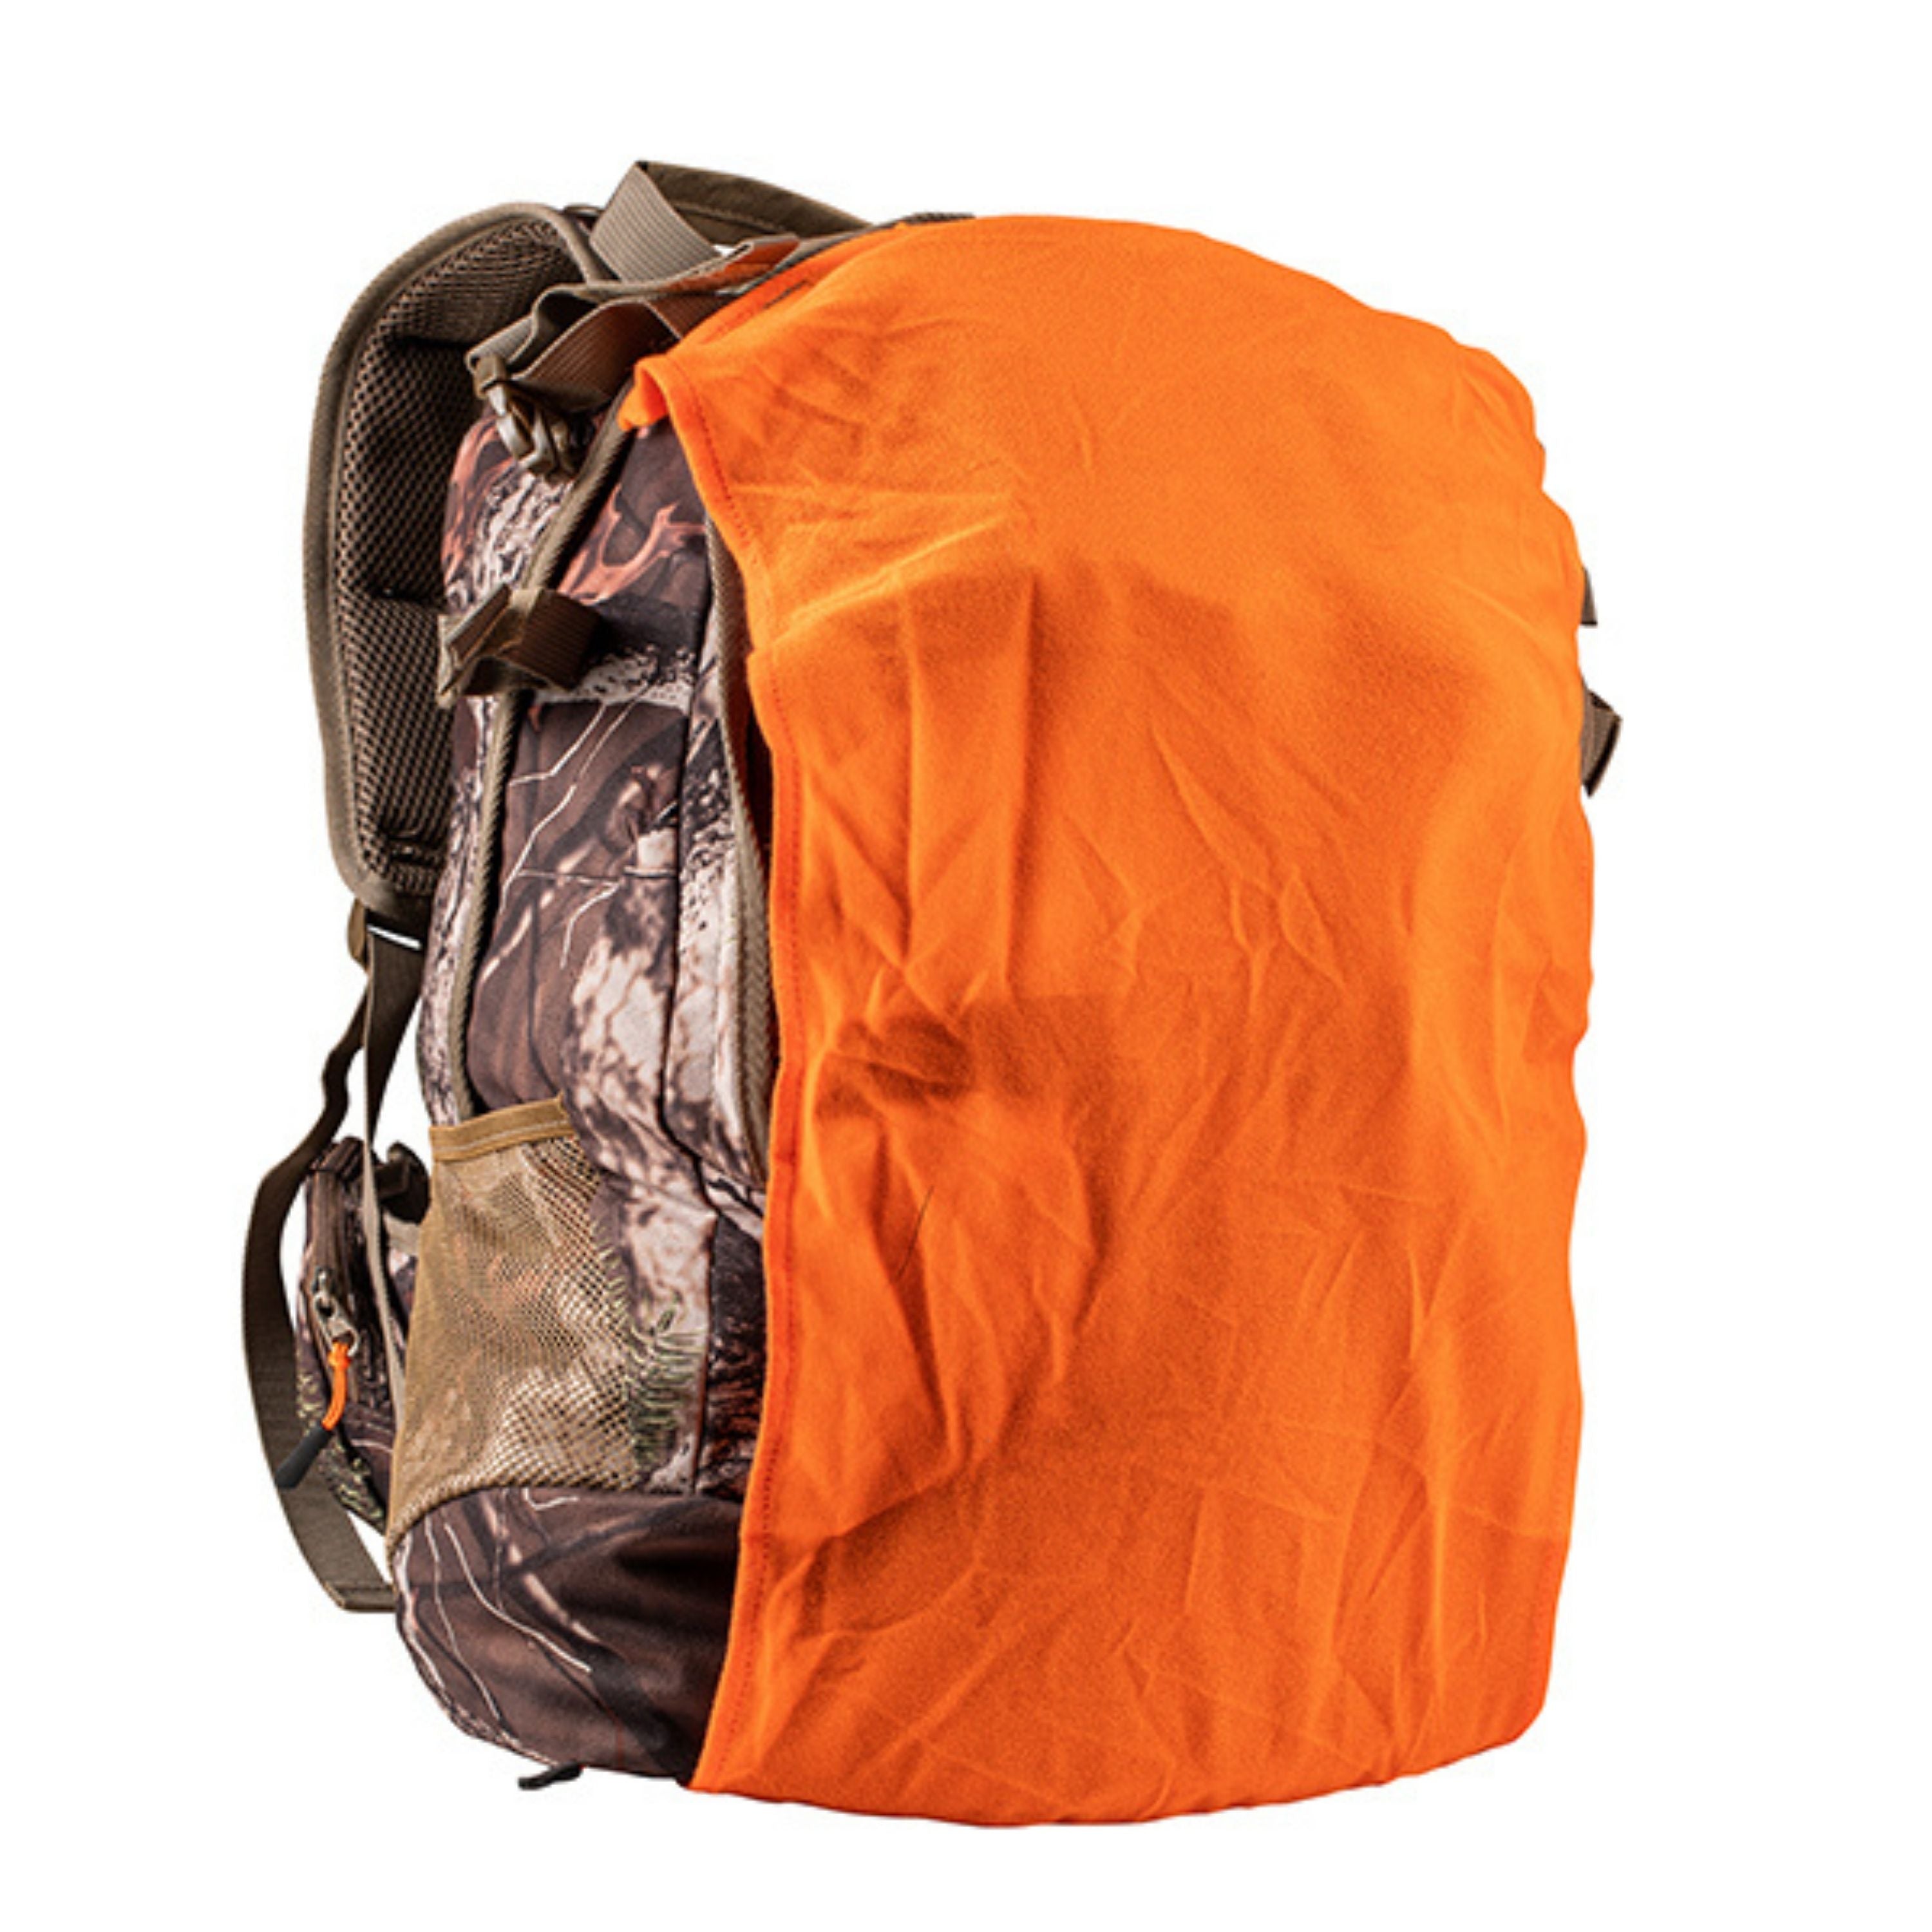 "Wood striker" camo backpack - 40 L